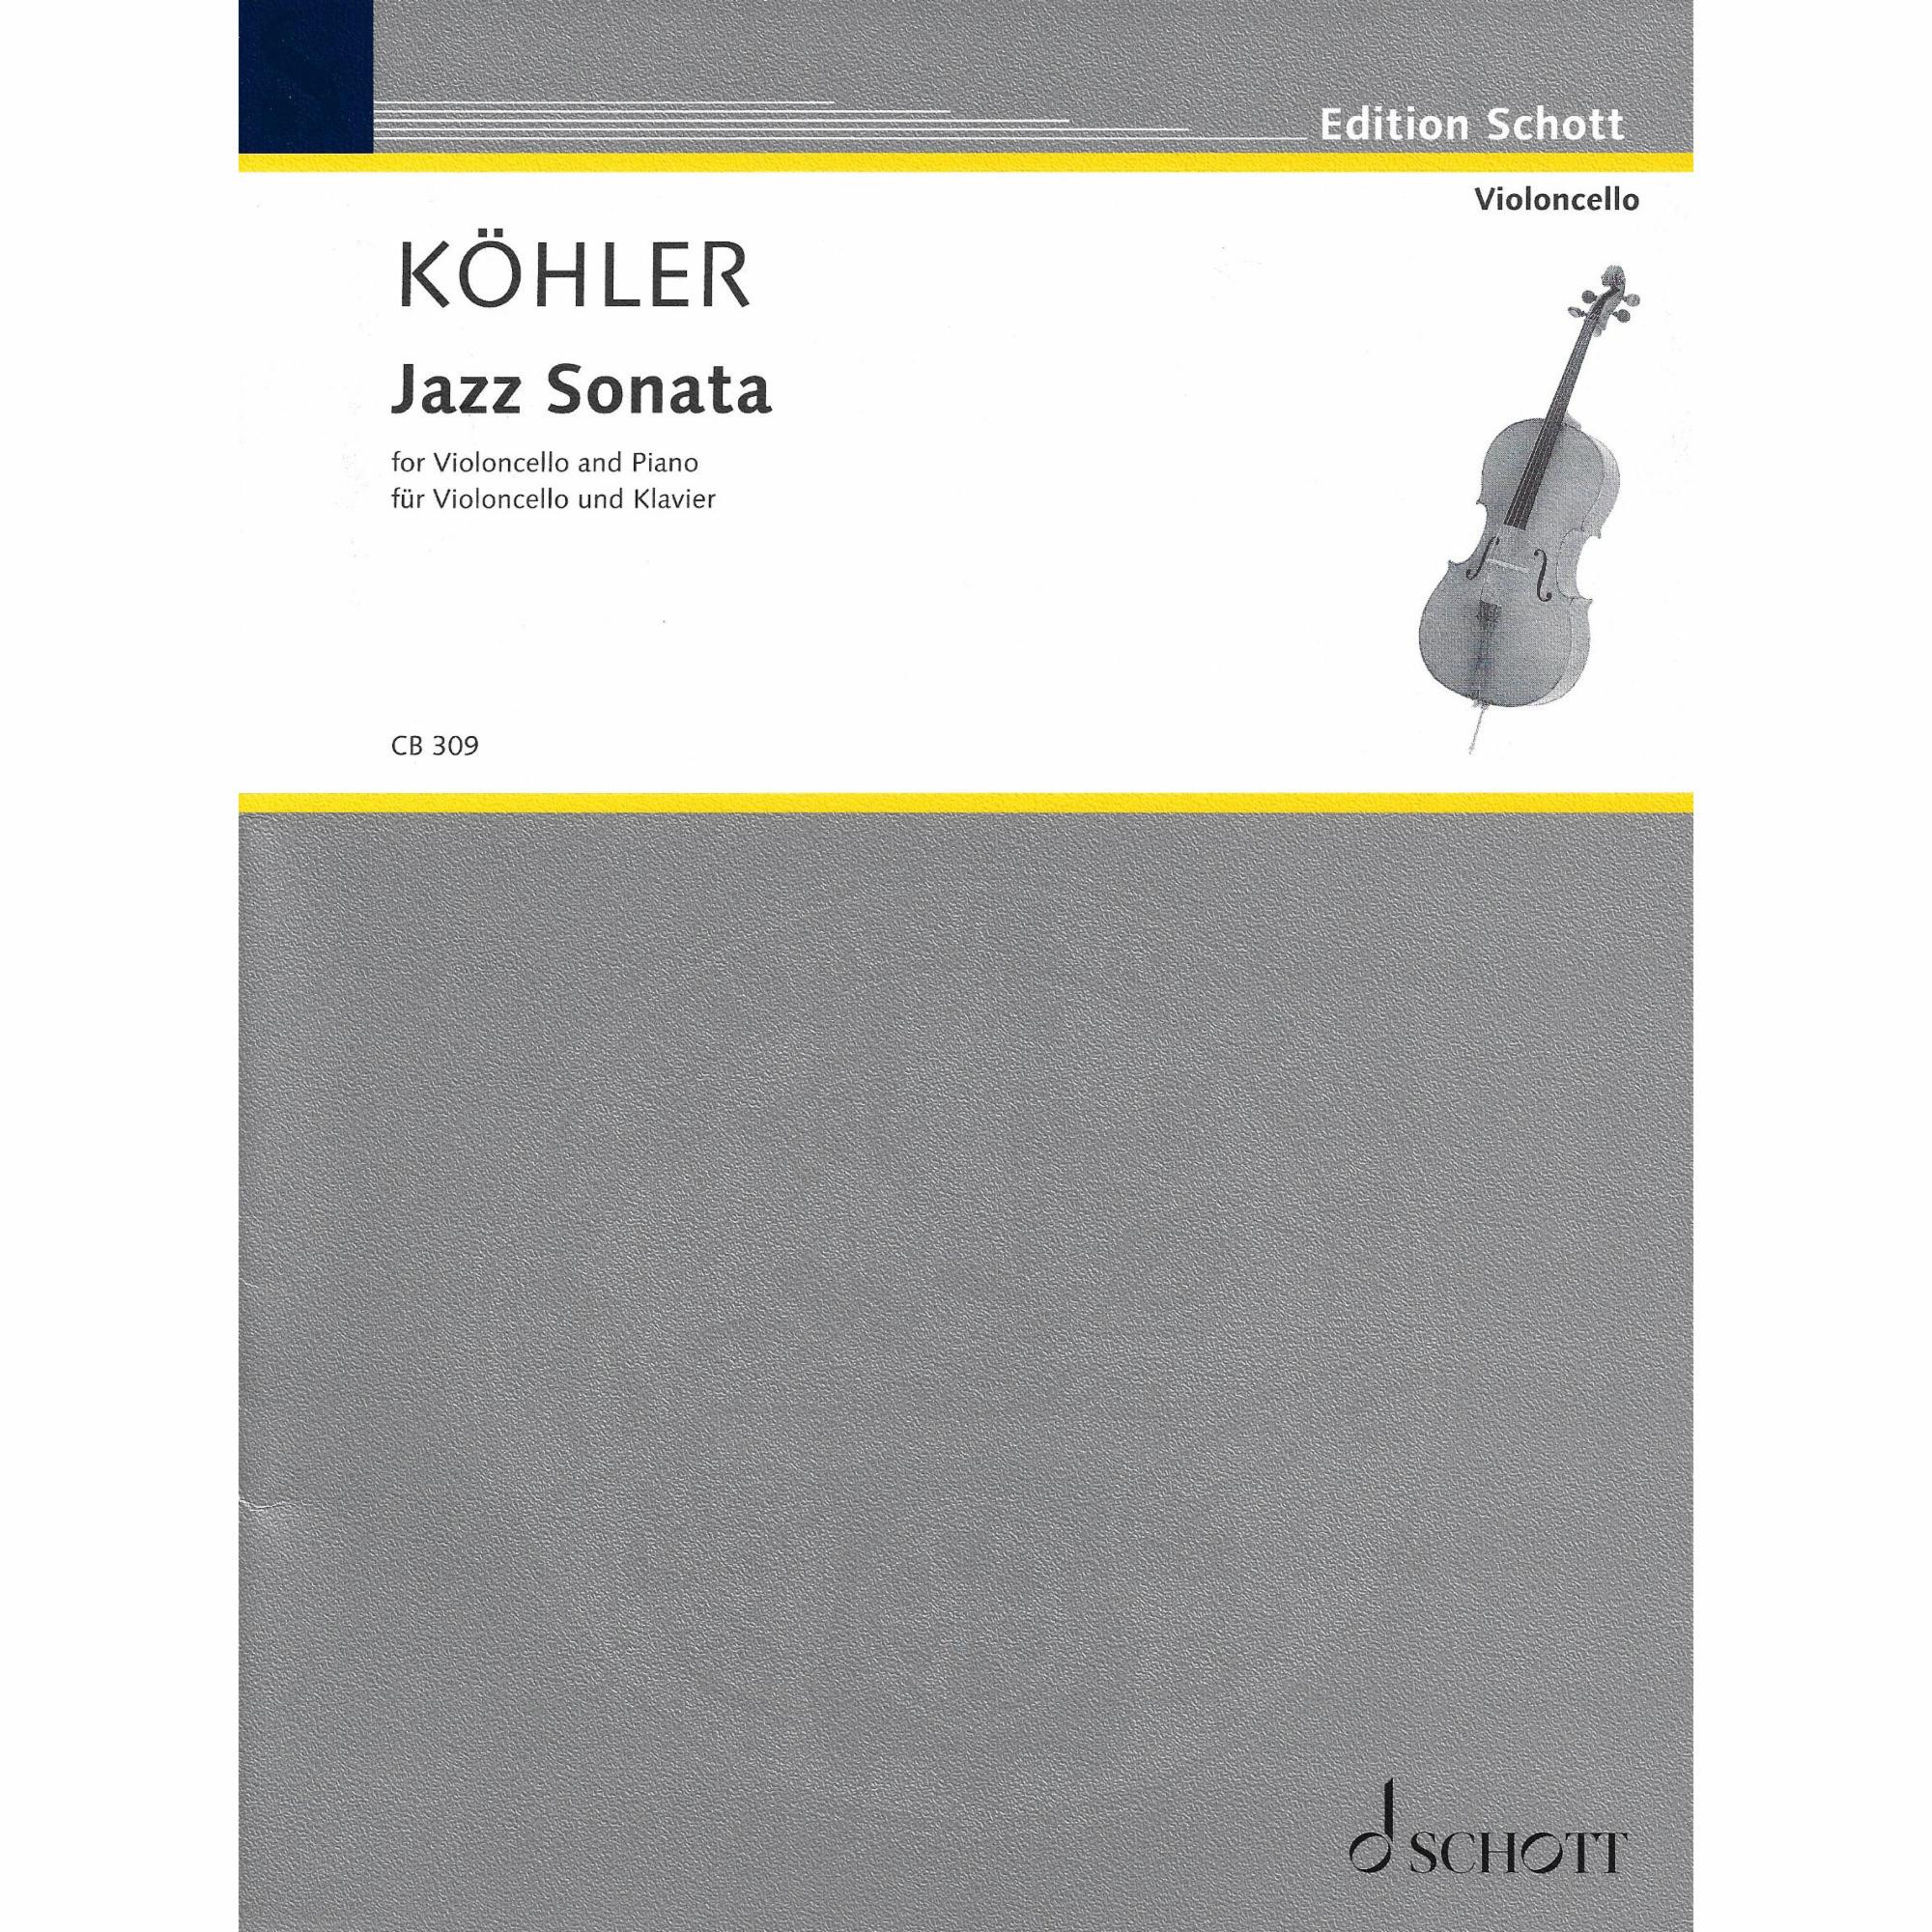 Kohler -- Jazz Sonata for Cello and Piano